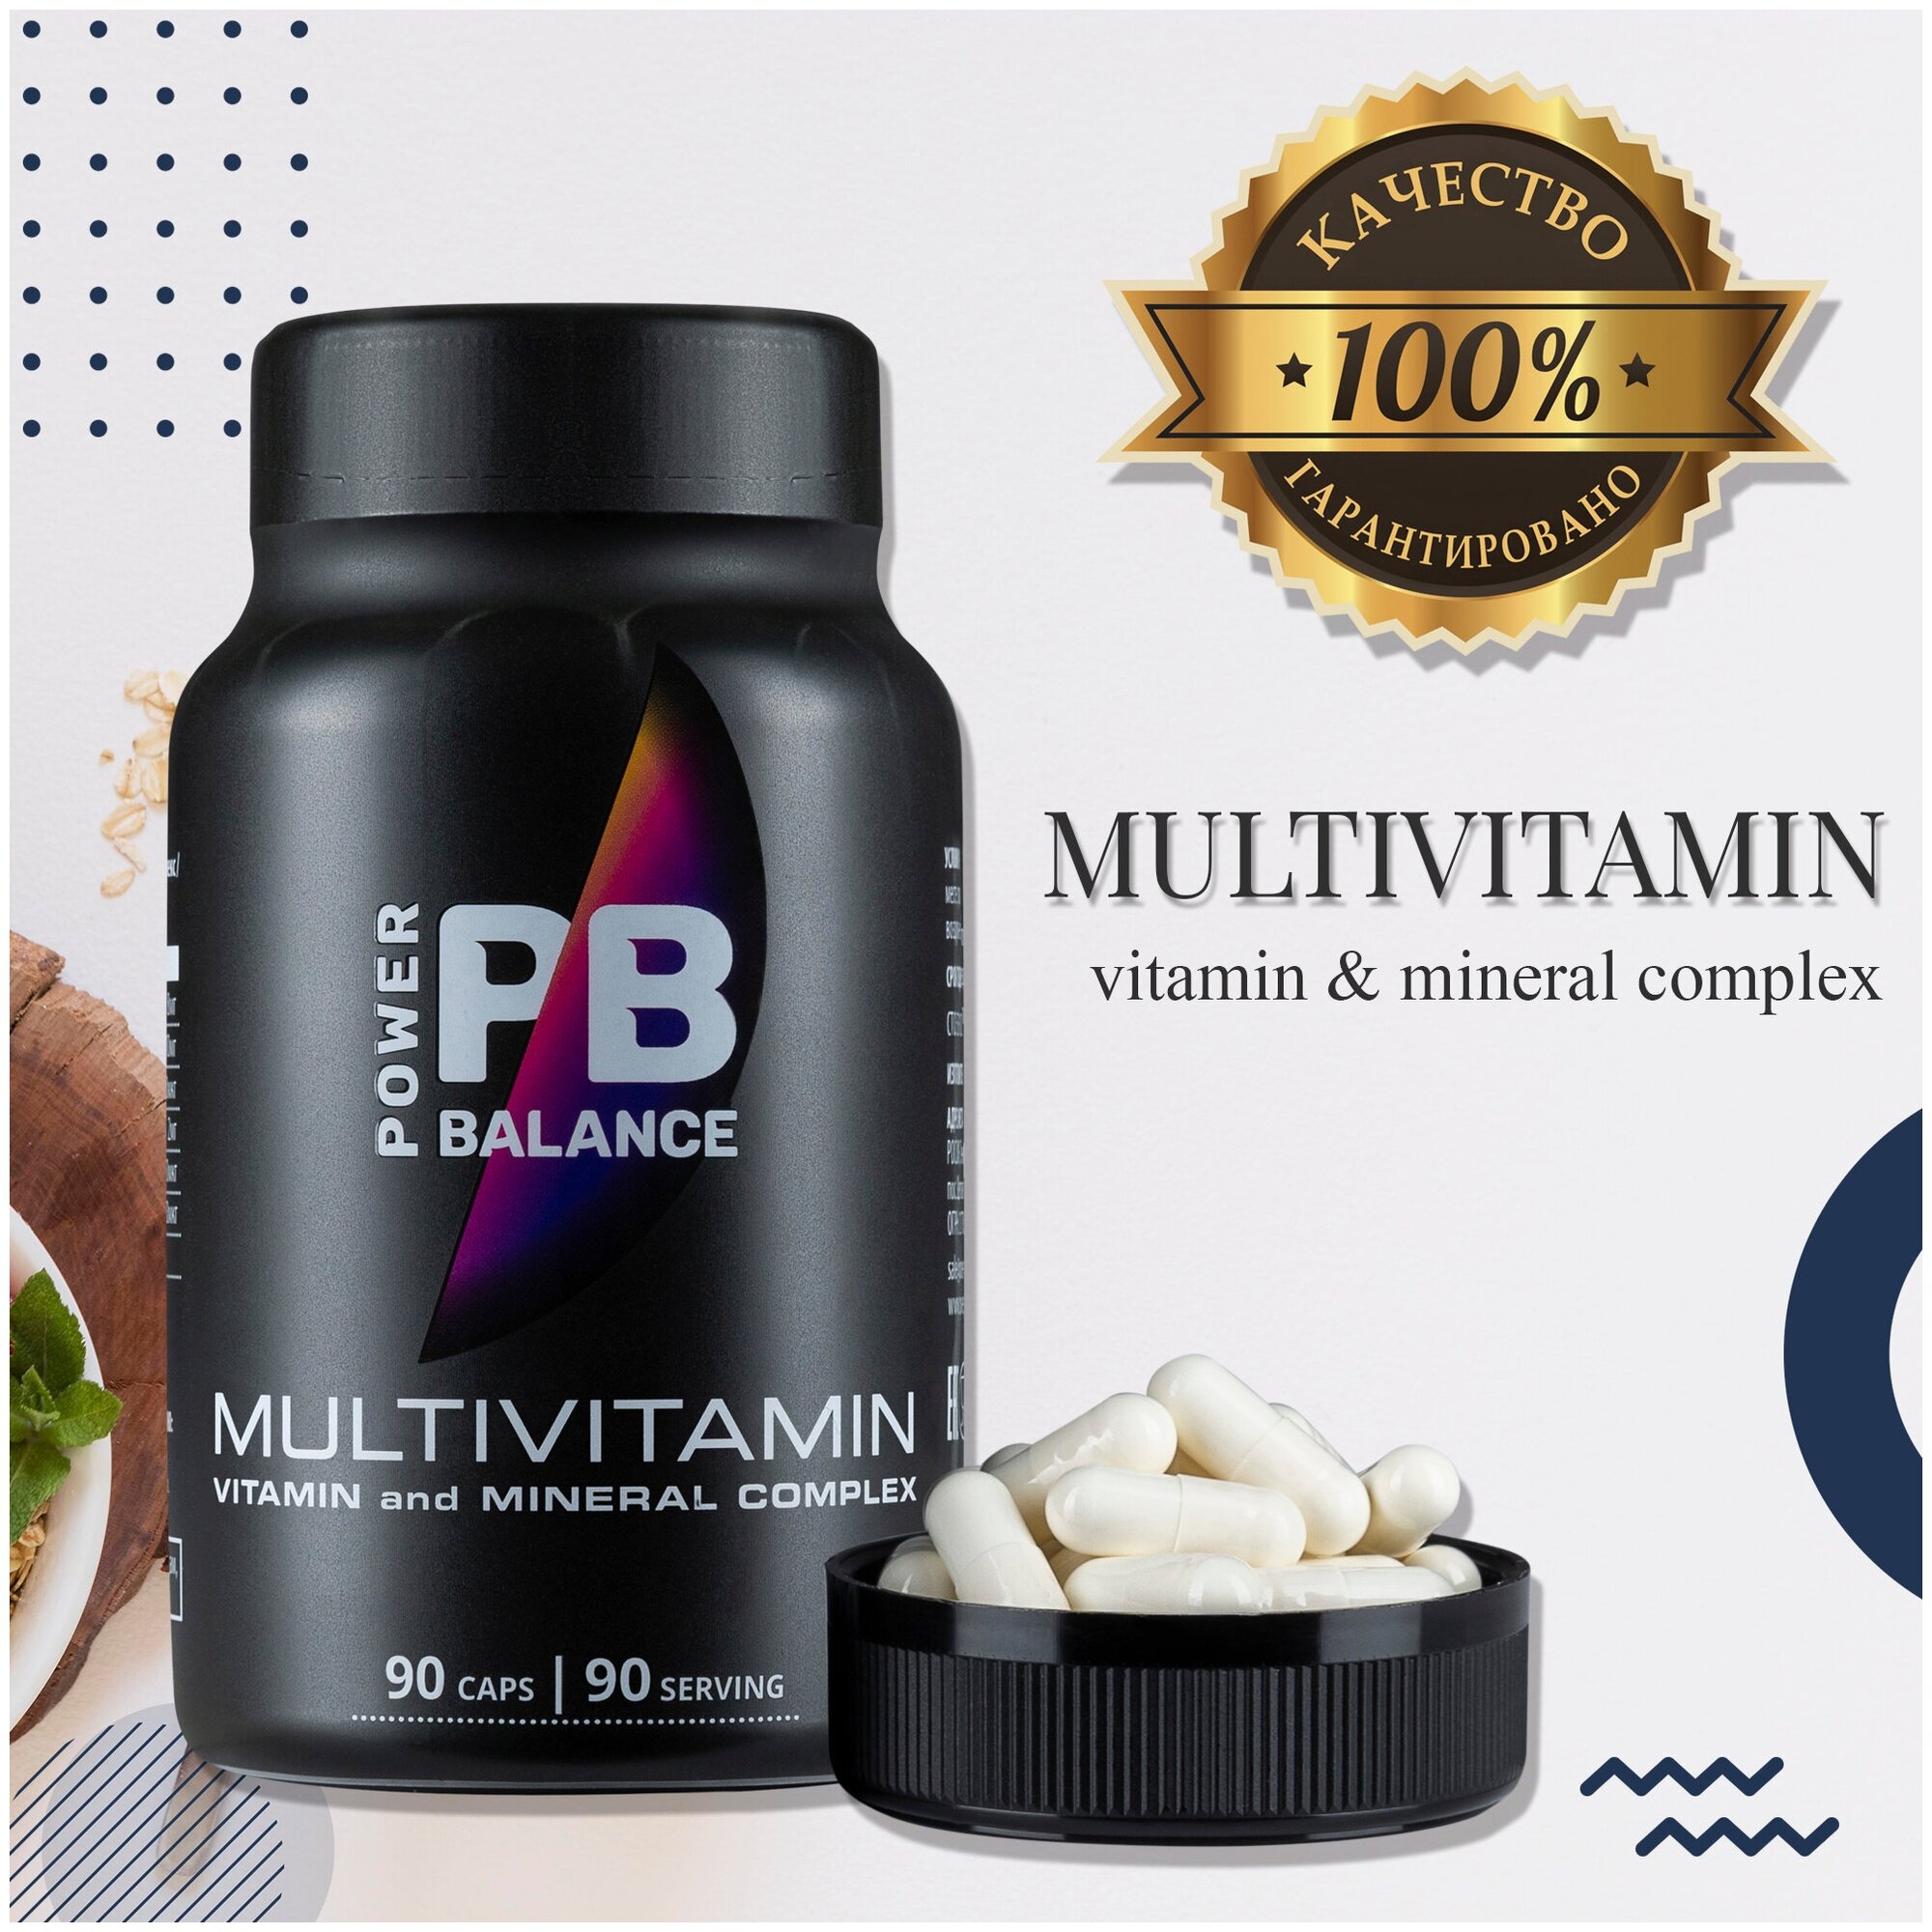 Витамины и аминокислоты Power Balance / Multivitamin vitamin and mineral complex / 90 капсул